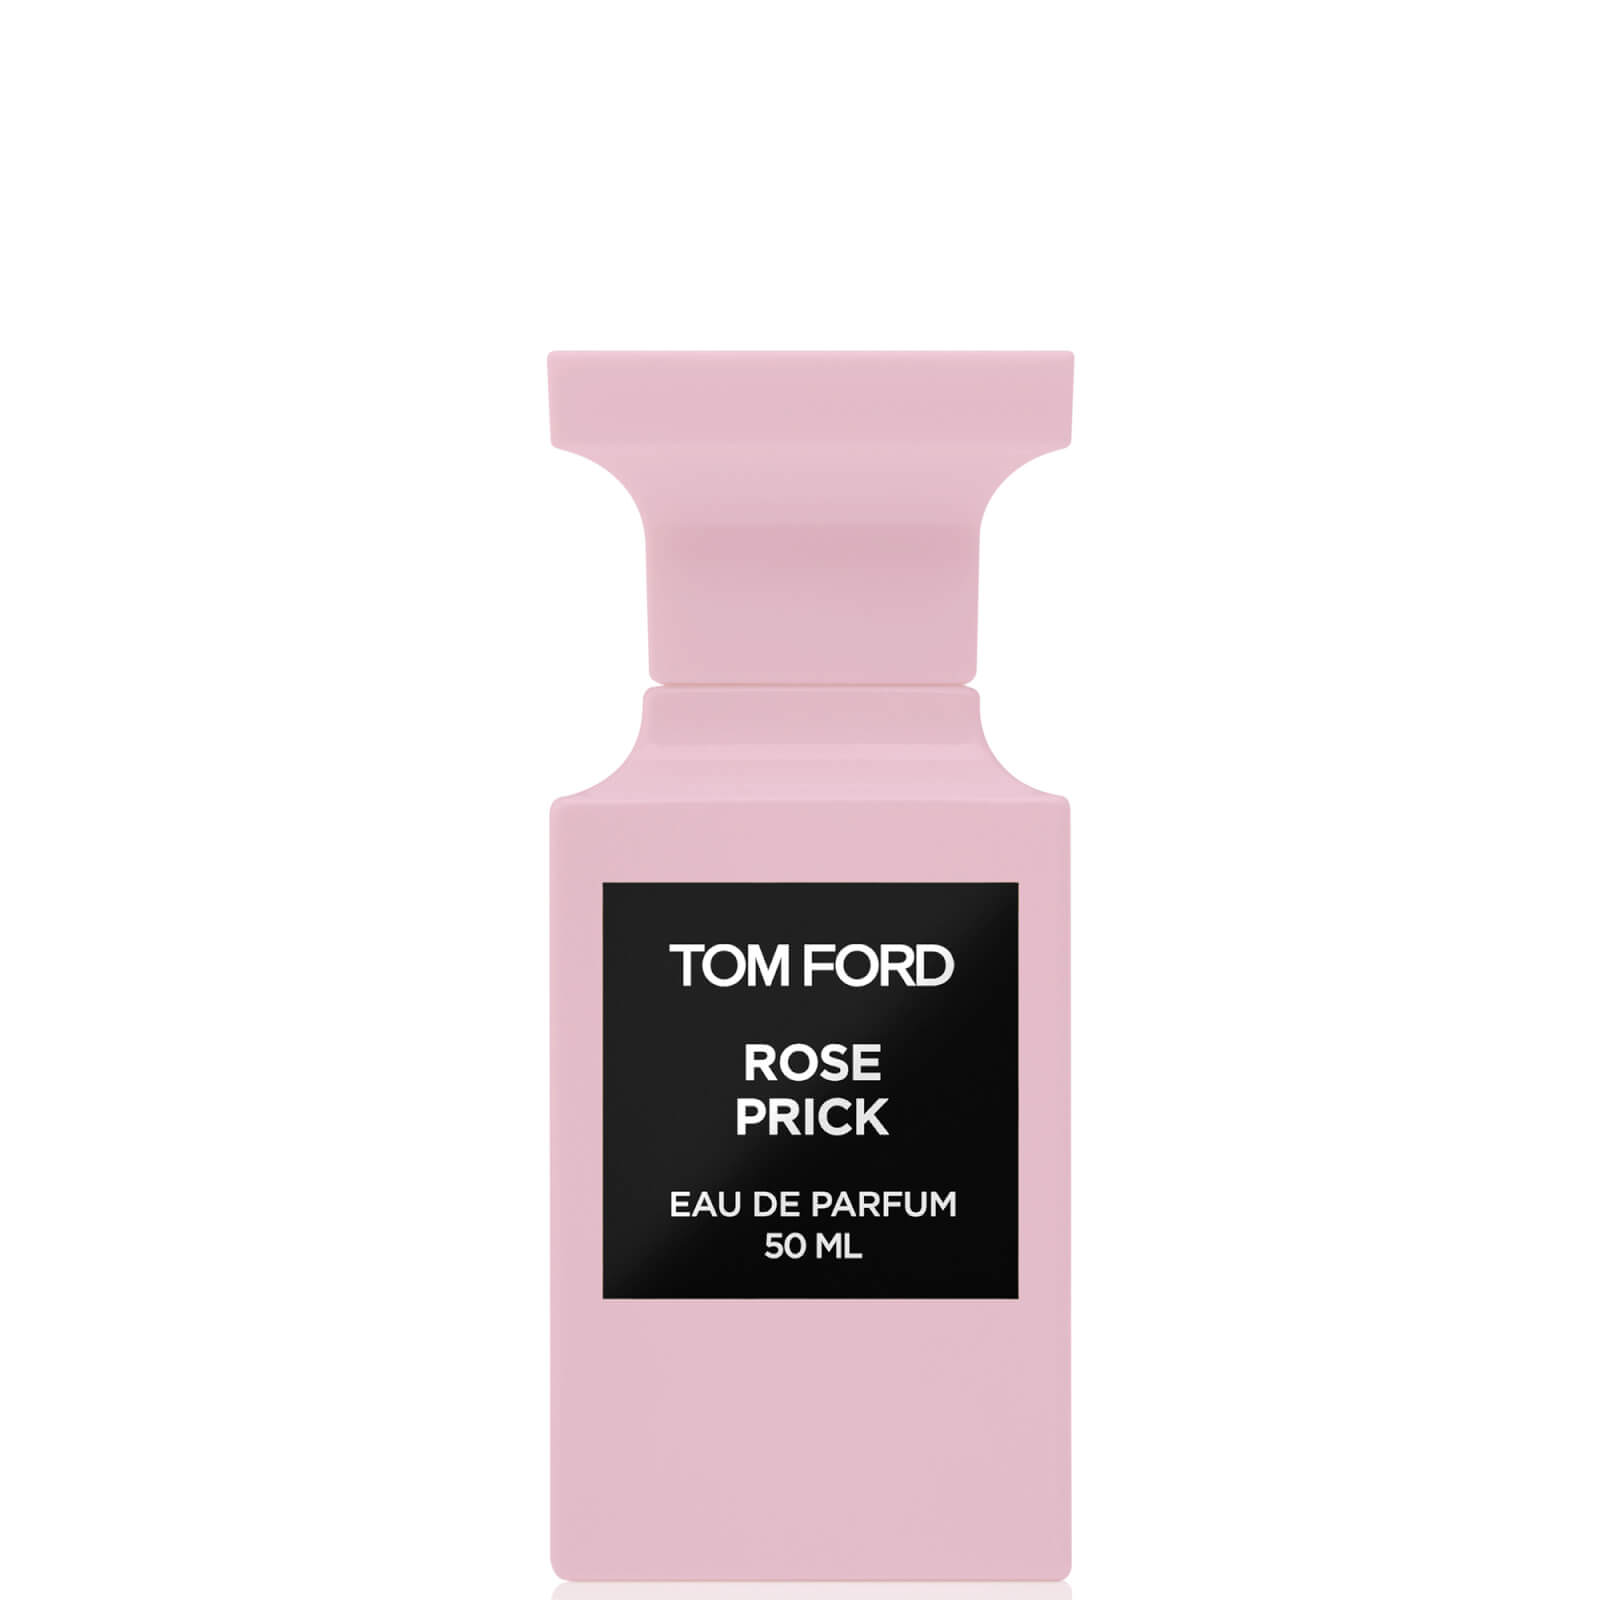 Photos - Women's Fragrance Tom Ford Rose Prick Eau de Parfum Spray - 50ml T8M1010000 